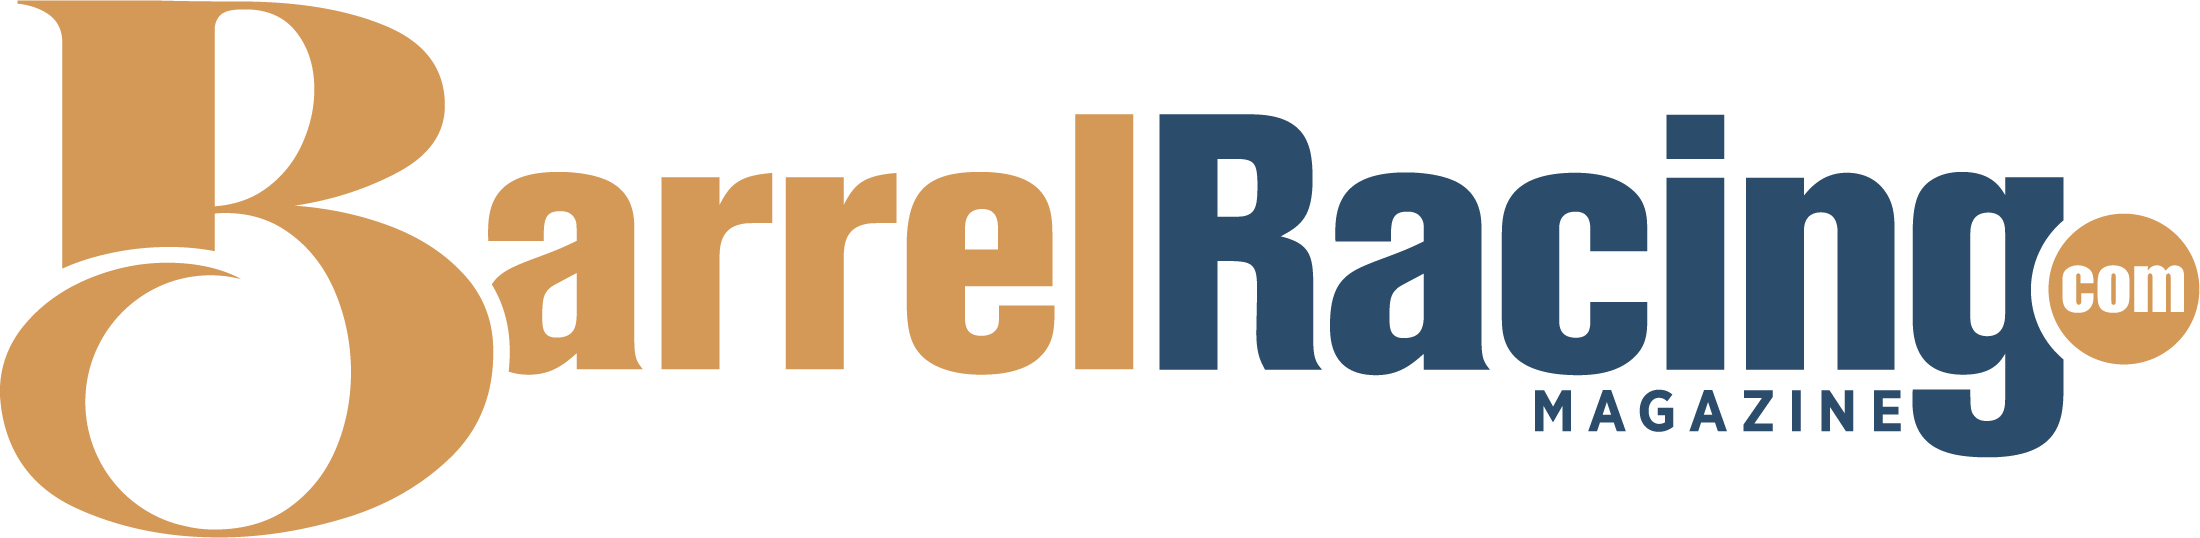 Barrel Racing Magazine logo